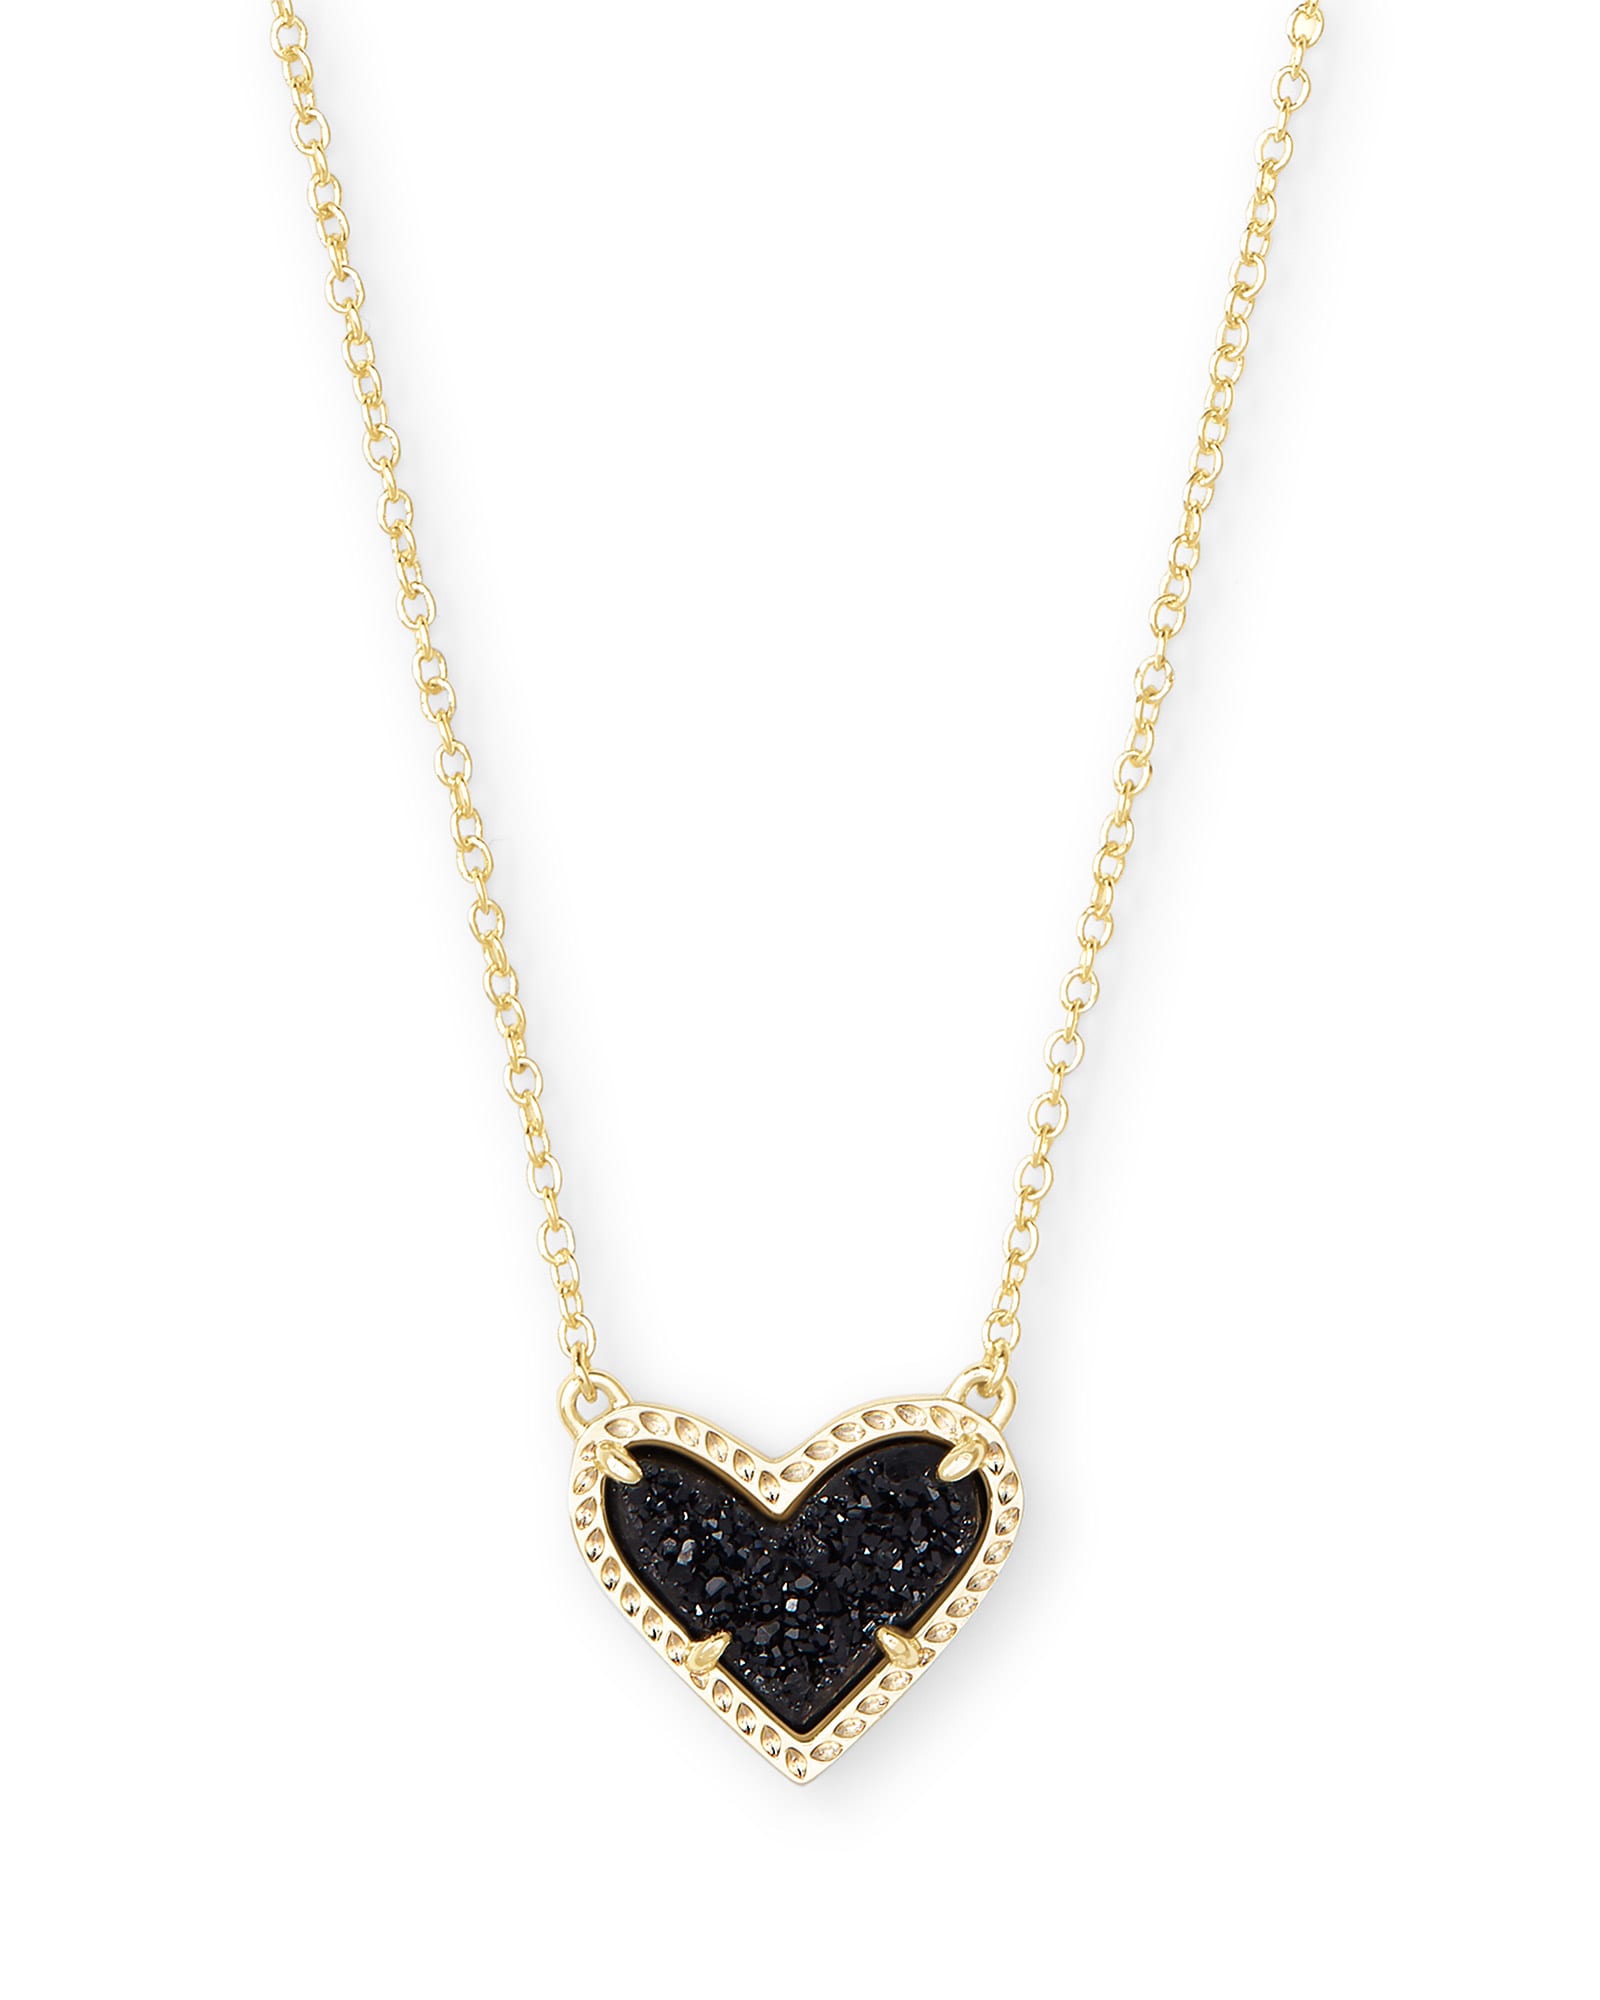 Ari Heart Gold Pendant Necklace in Rose Quartz | Kendra Scott | Kendra Scott